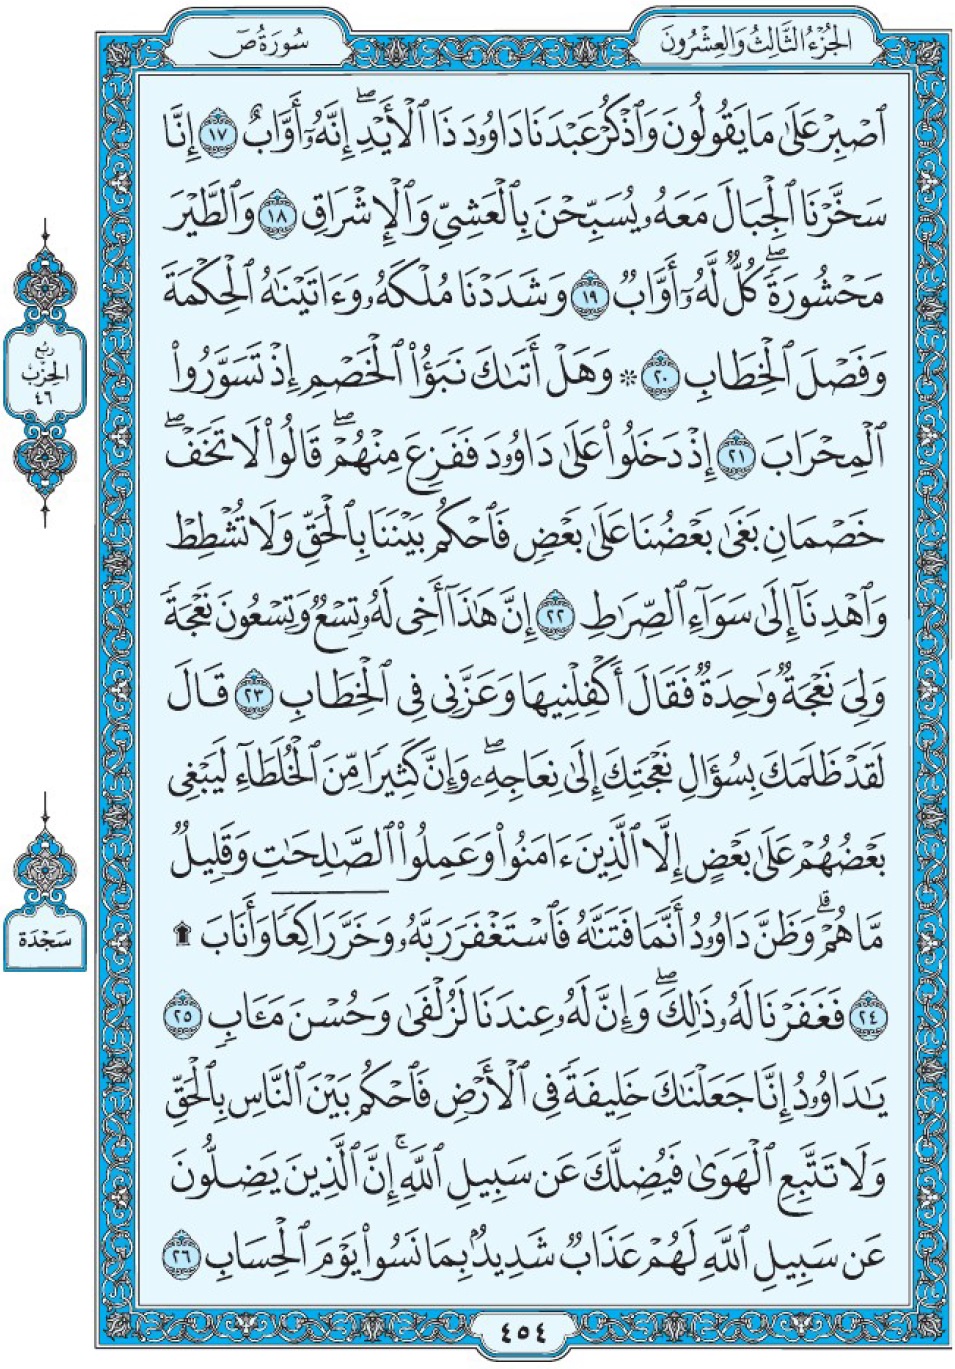 Коран Мединский мусхаф страница 454, Сад, аят 17-26